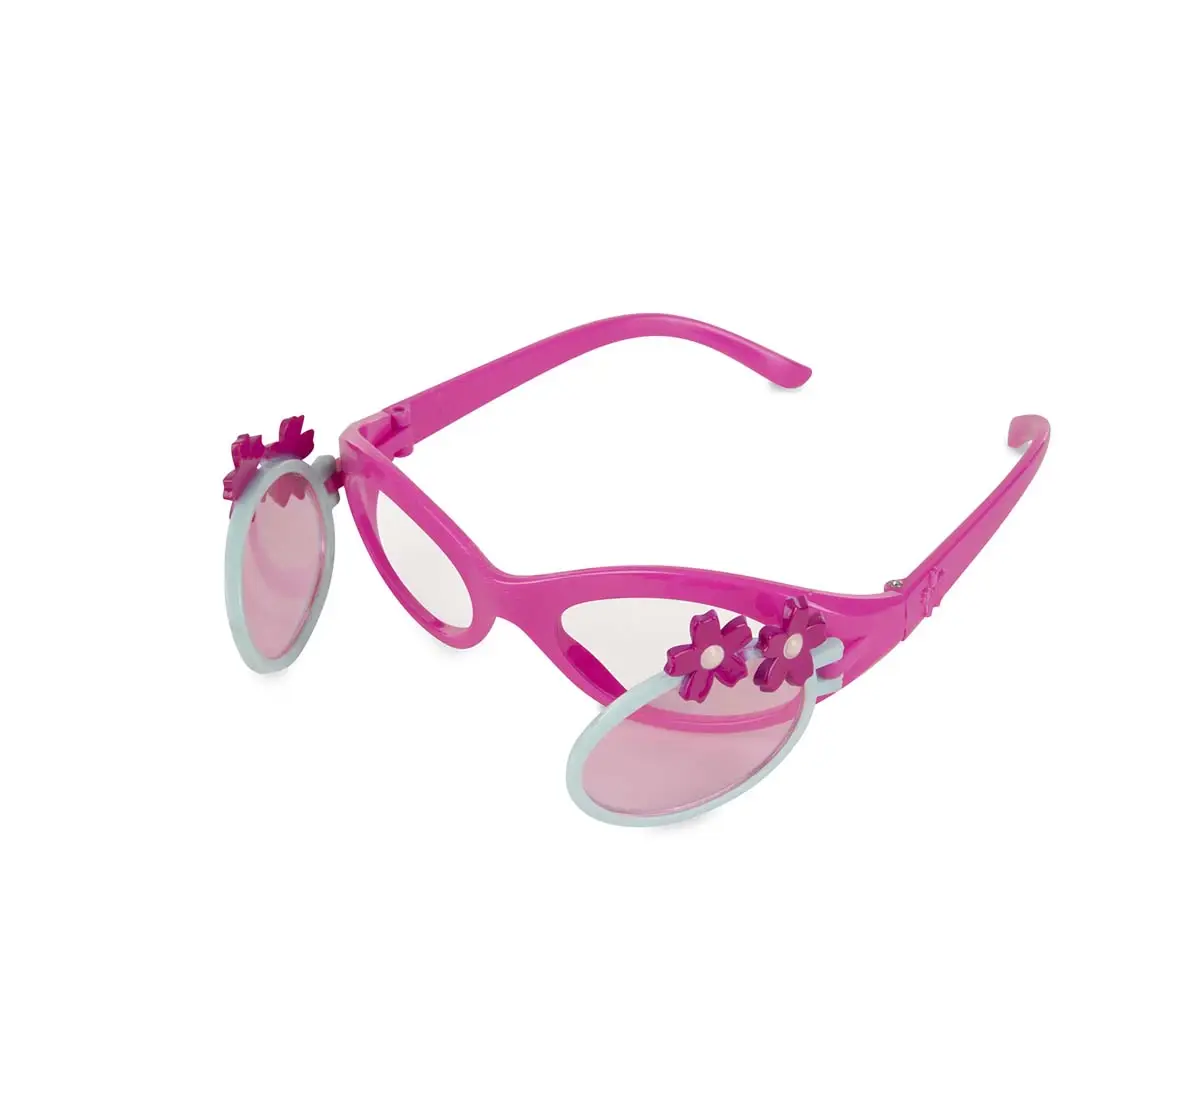 Melissa & Doug : Pretty Petals Flip-Up Sunglasses Accessories for Kids Age 5Y+